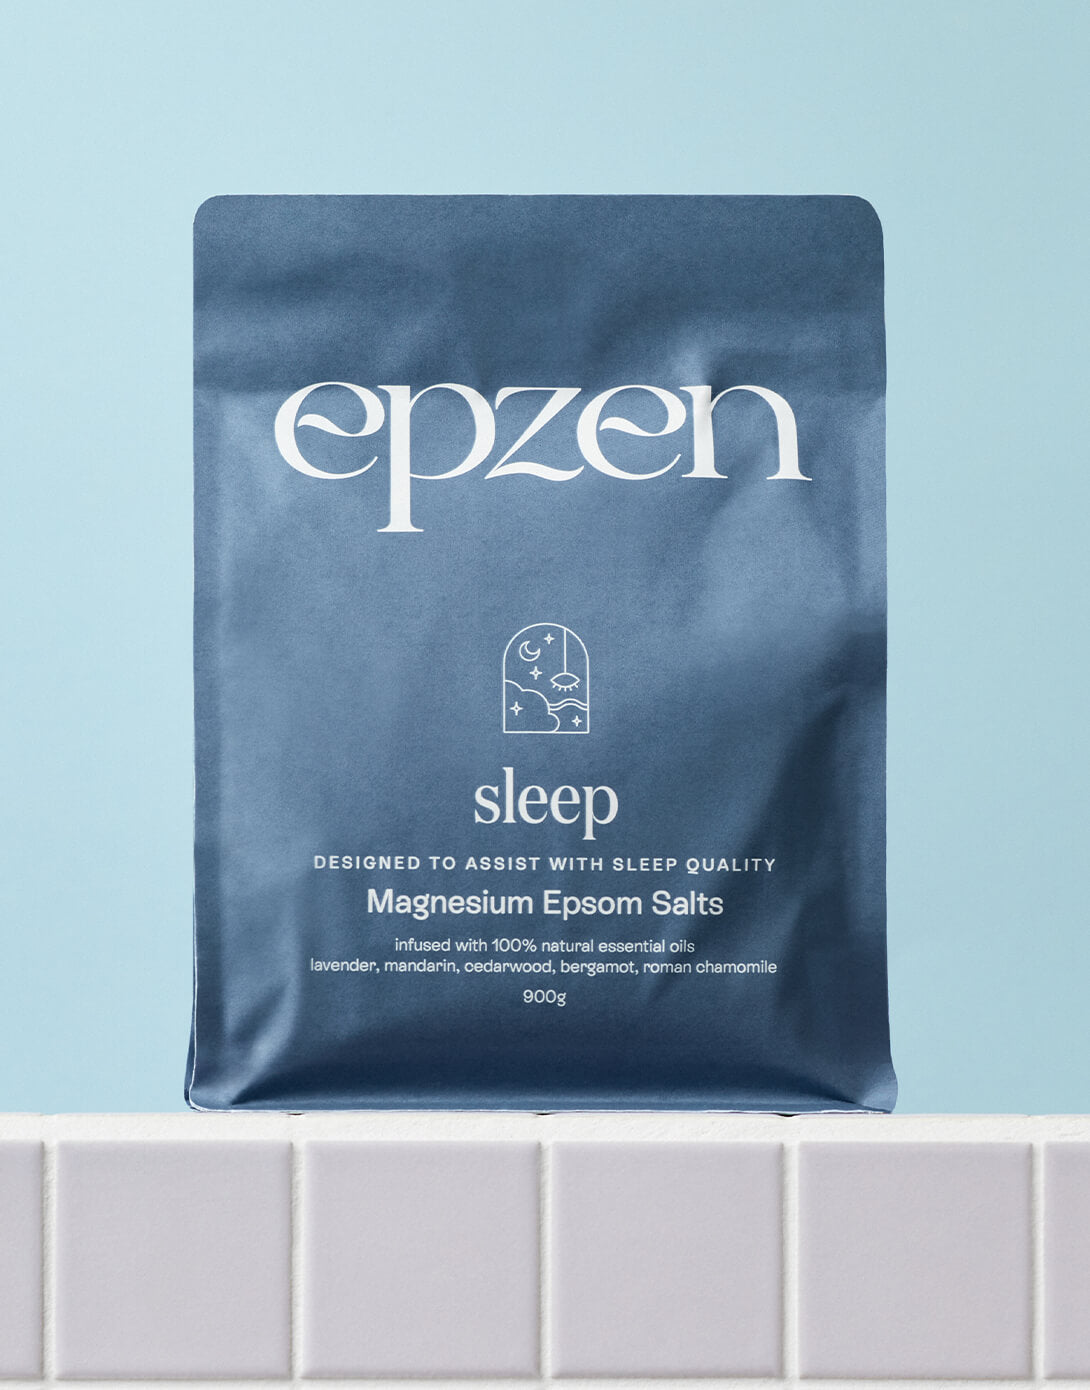 Epzen - Magnesium Bath Crystals Sleep 900g